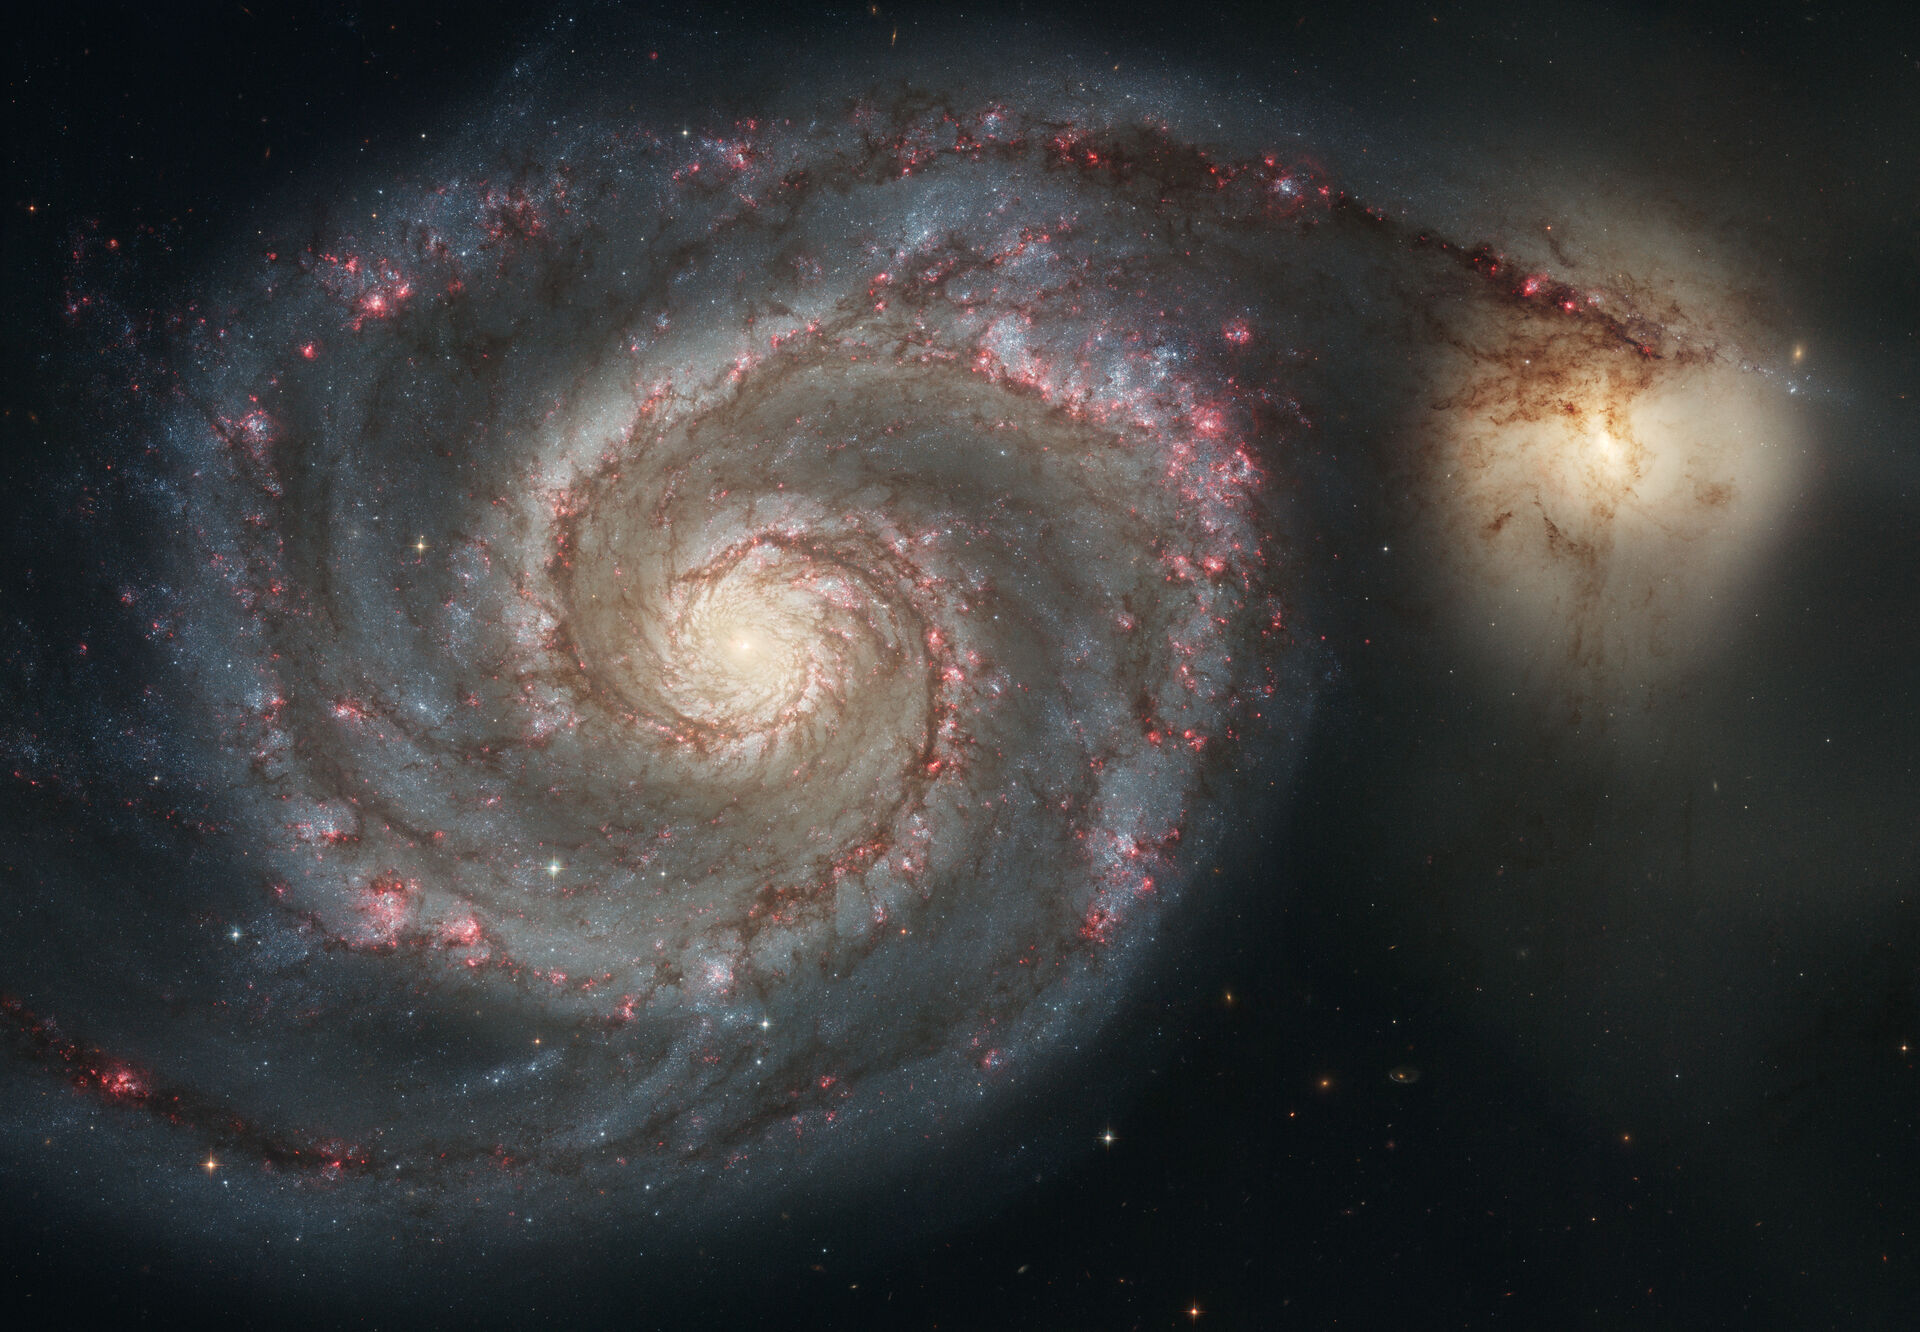 Galaxy, spiral arms